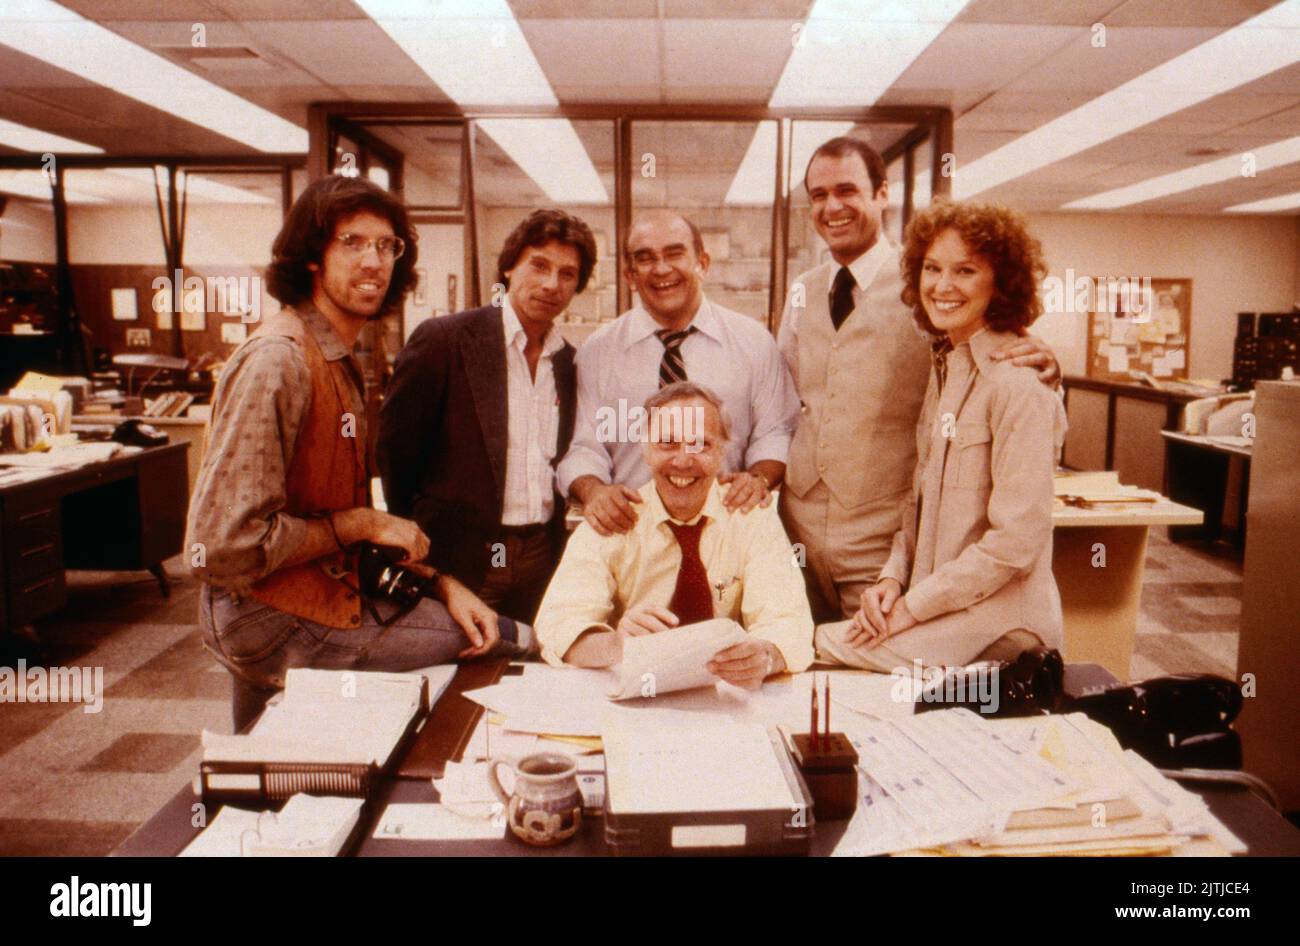 Lou Grant, Fernsehserie, USA 1977 - 1982, Darsteller: Daryl Anderson, Robert Walden, Edward Asner, Jack Bannon, Linda Kelsey, Mason Adams (sitzend) Stock Photo